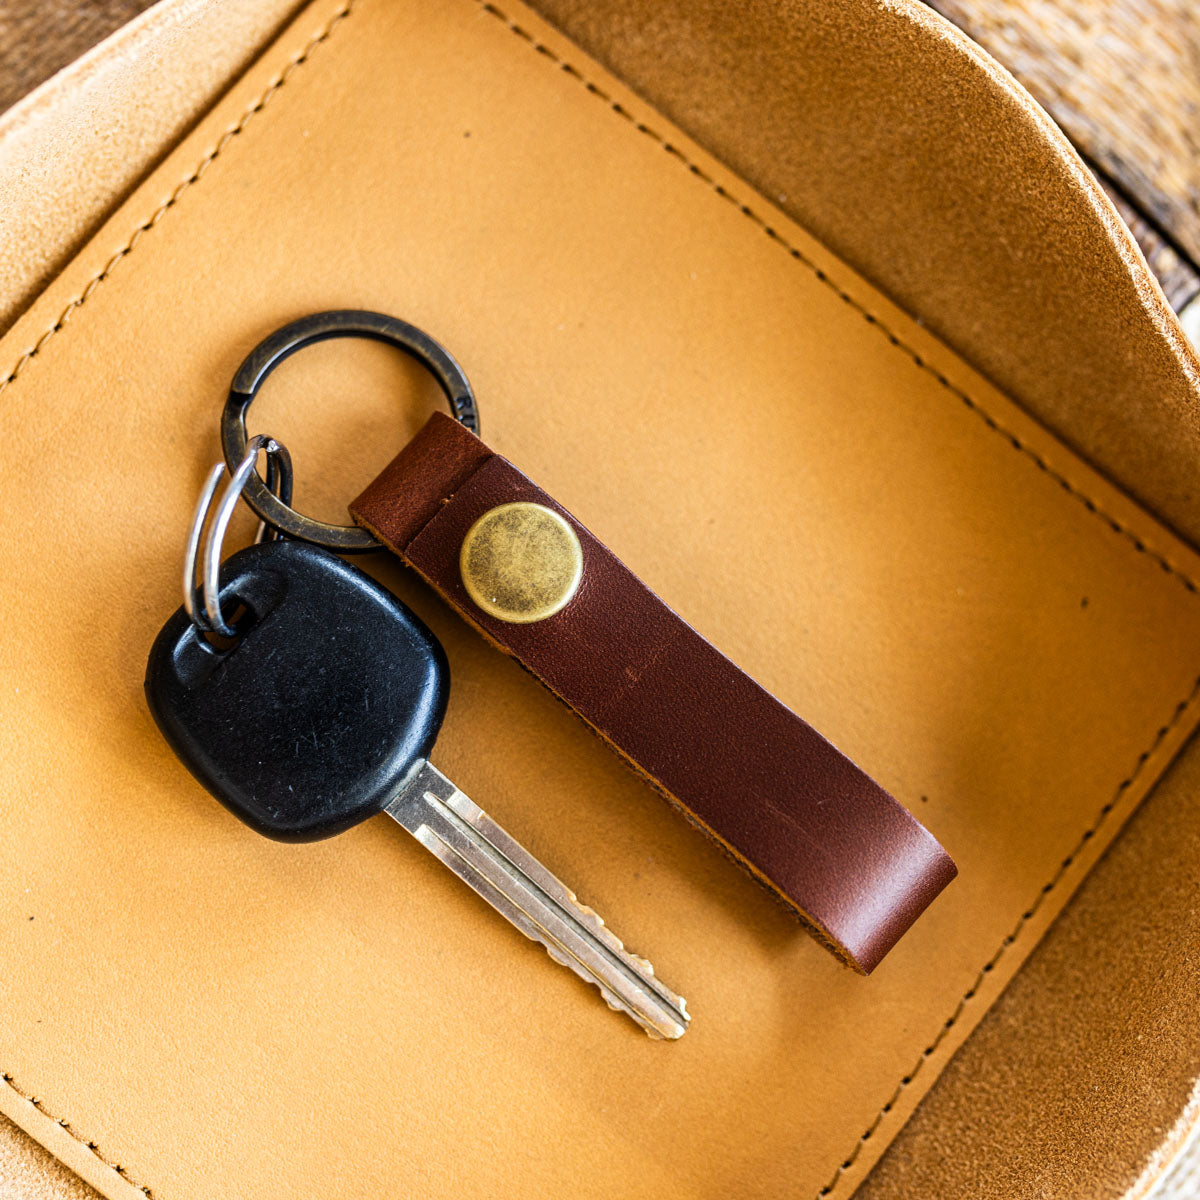 Personalized Leather Zipper Car Key Case,Key Bag,Leather key  holder,handmade key case,Key Organizer,Leather Key Pocket,Leather car  keychain